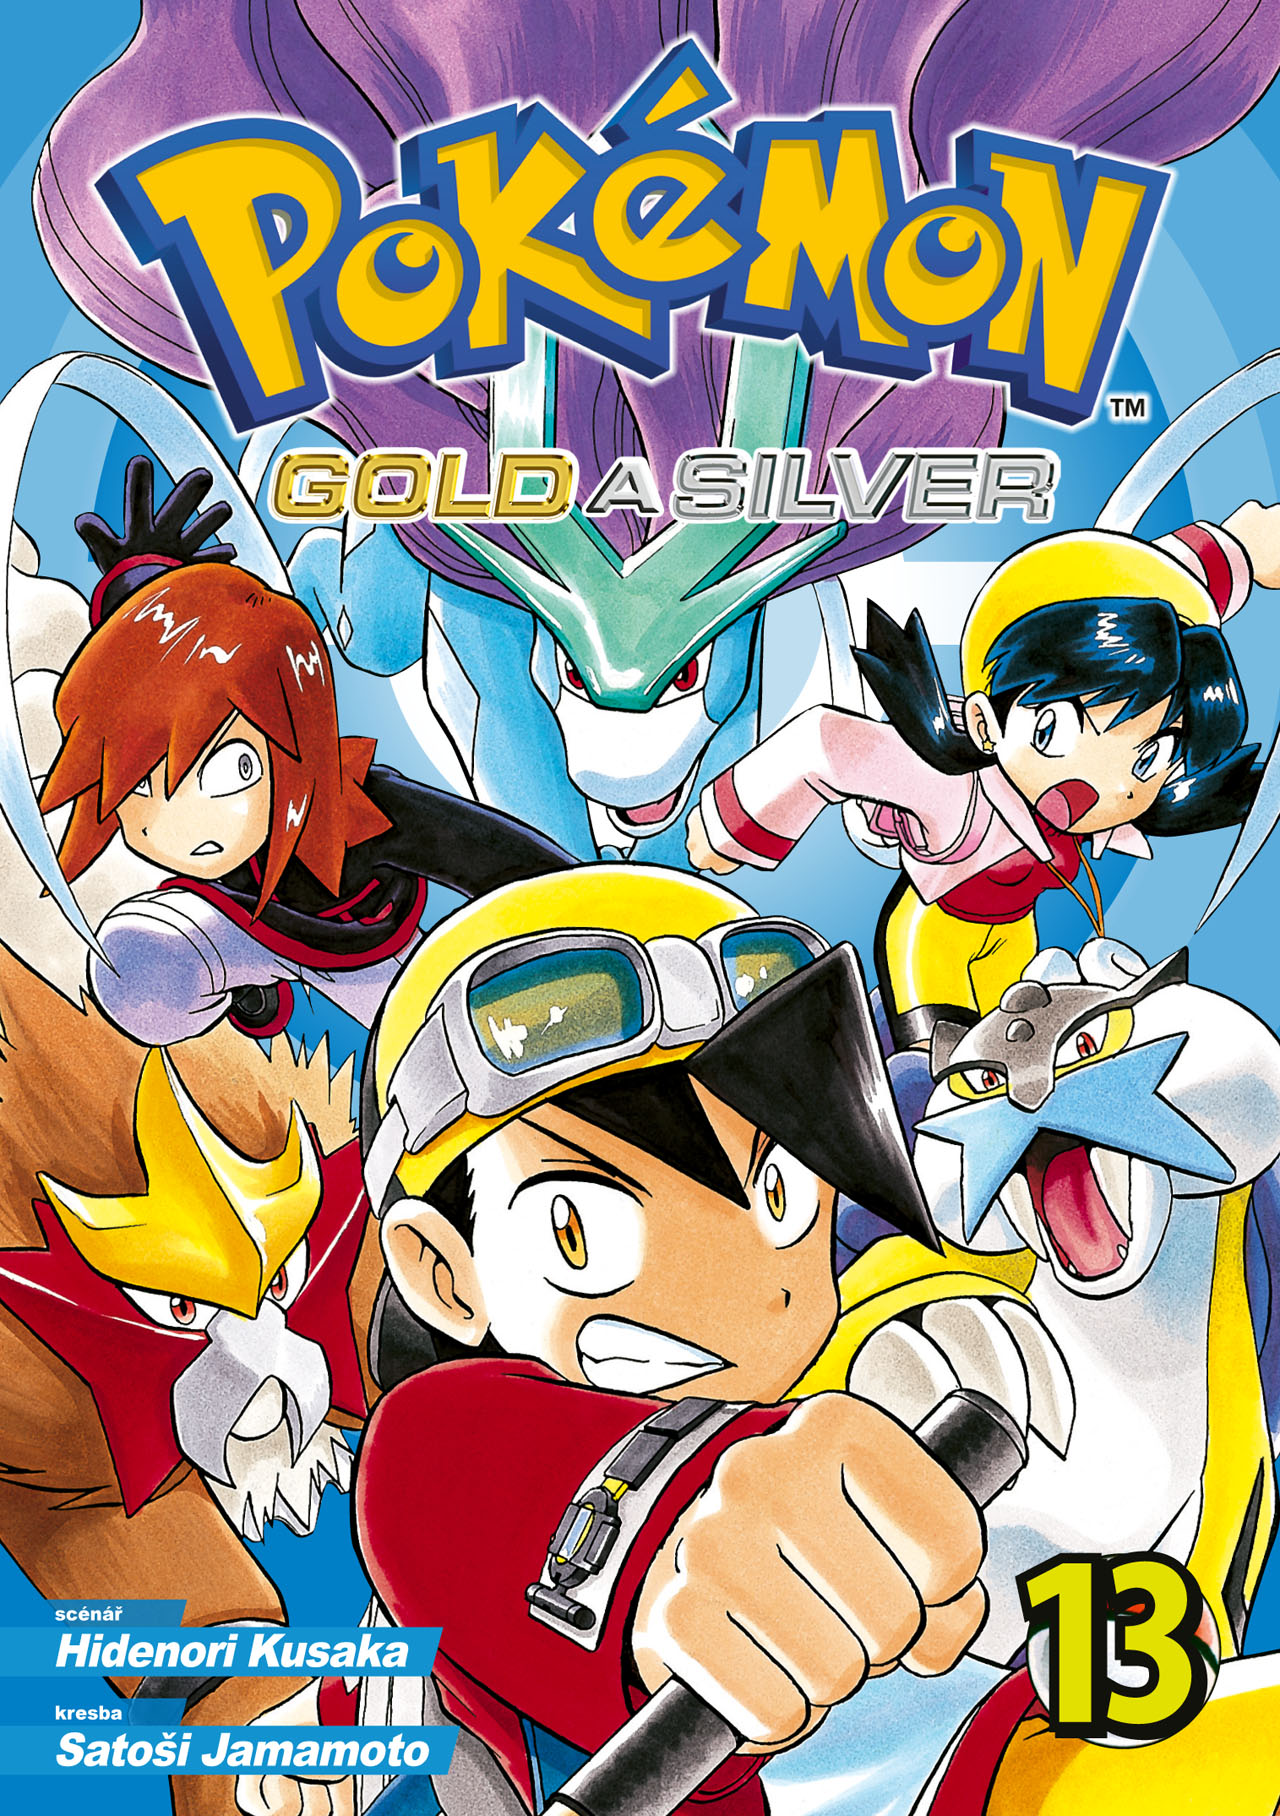 Pokémon 13 (Gold a Silver)